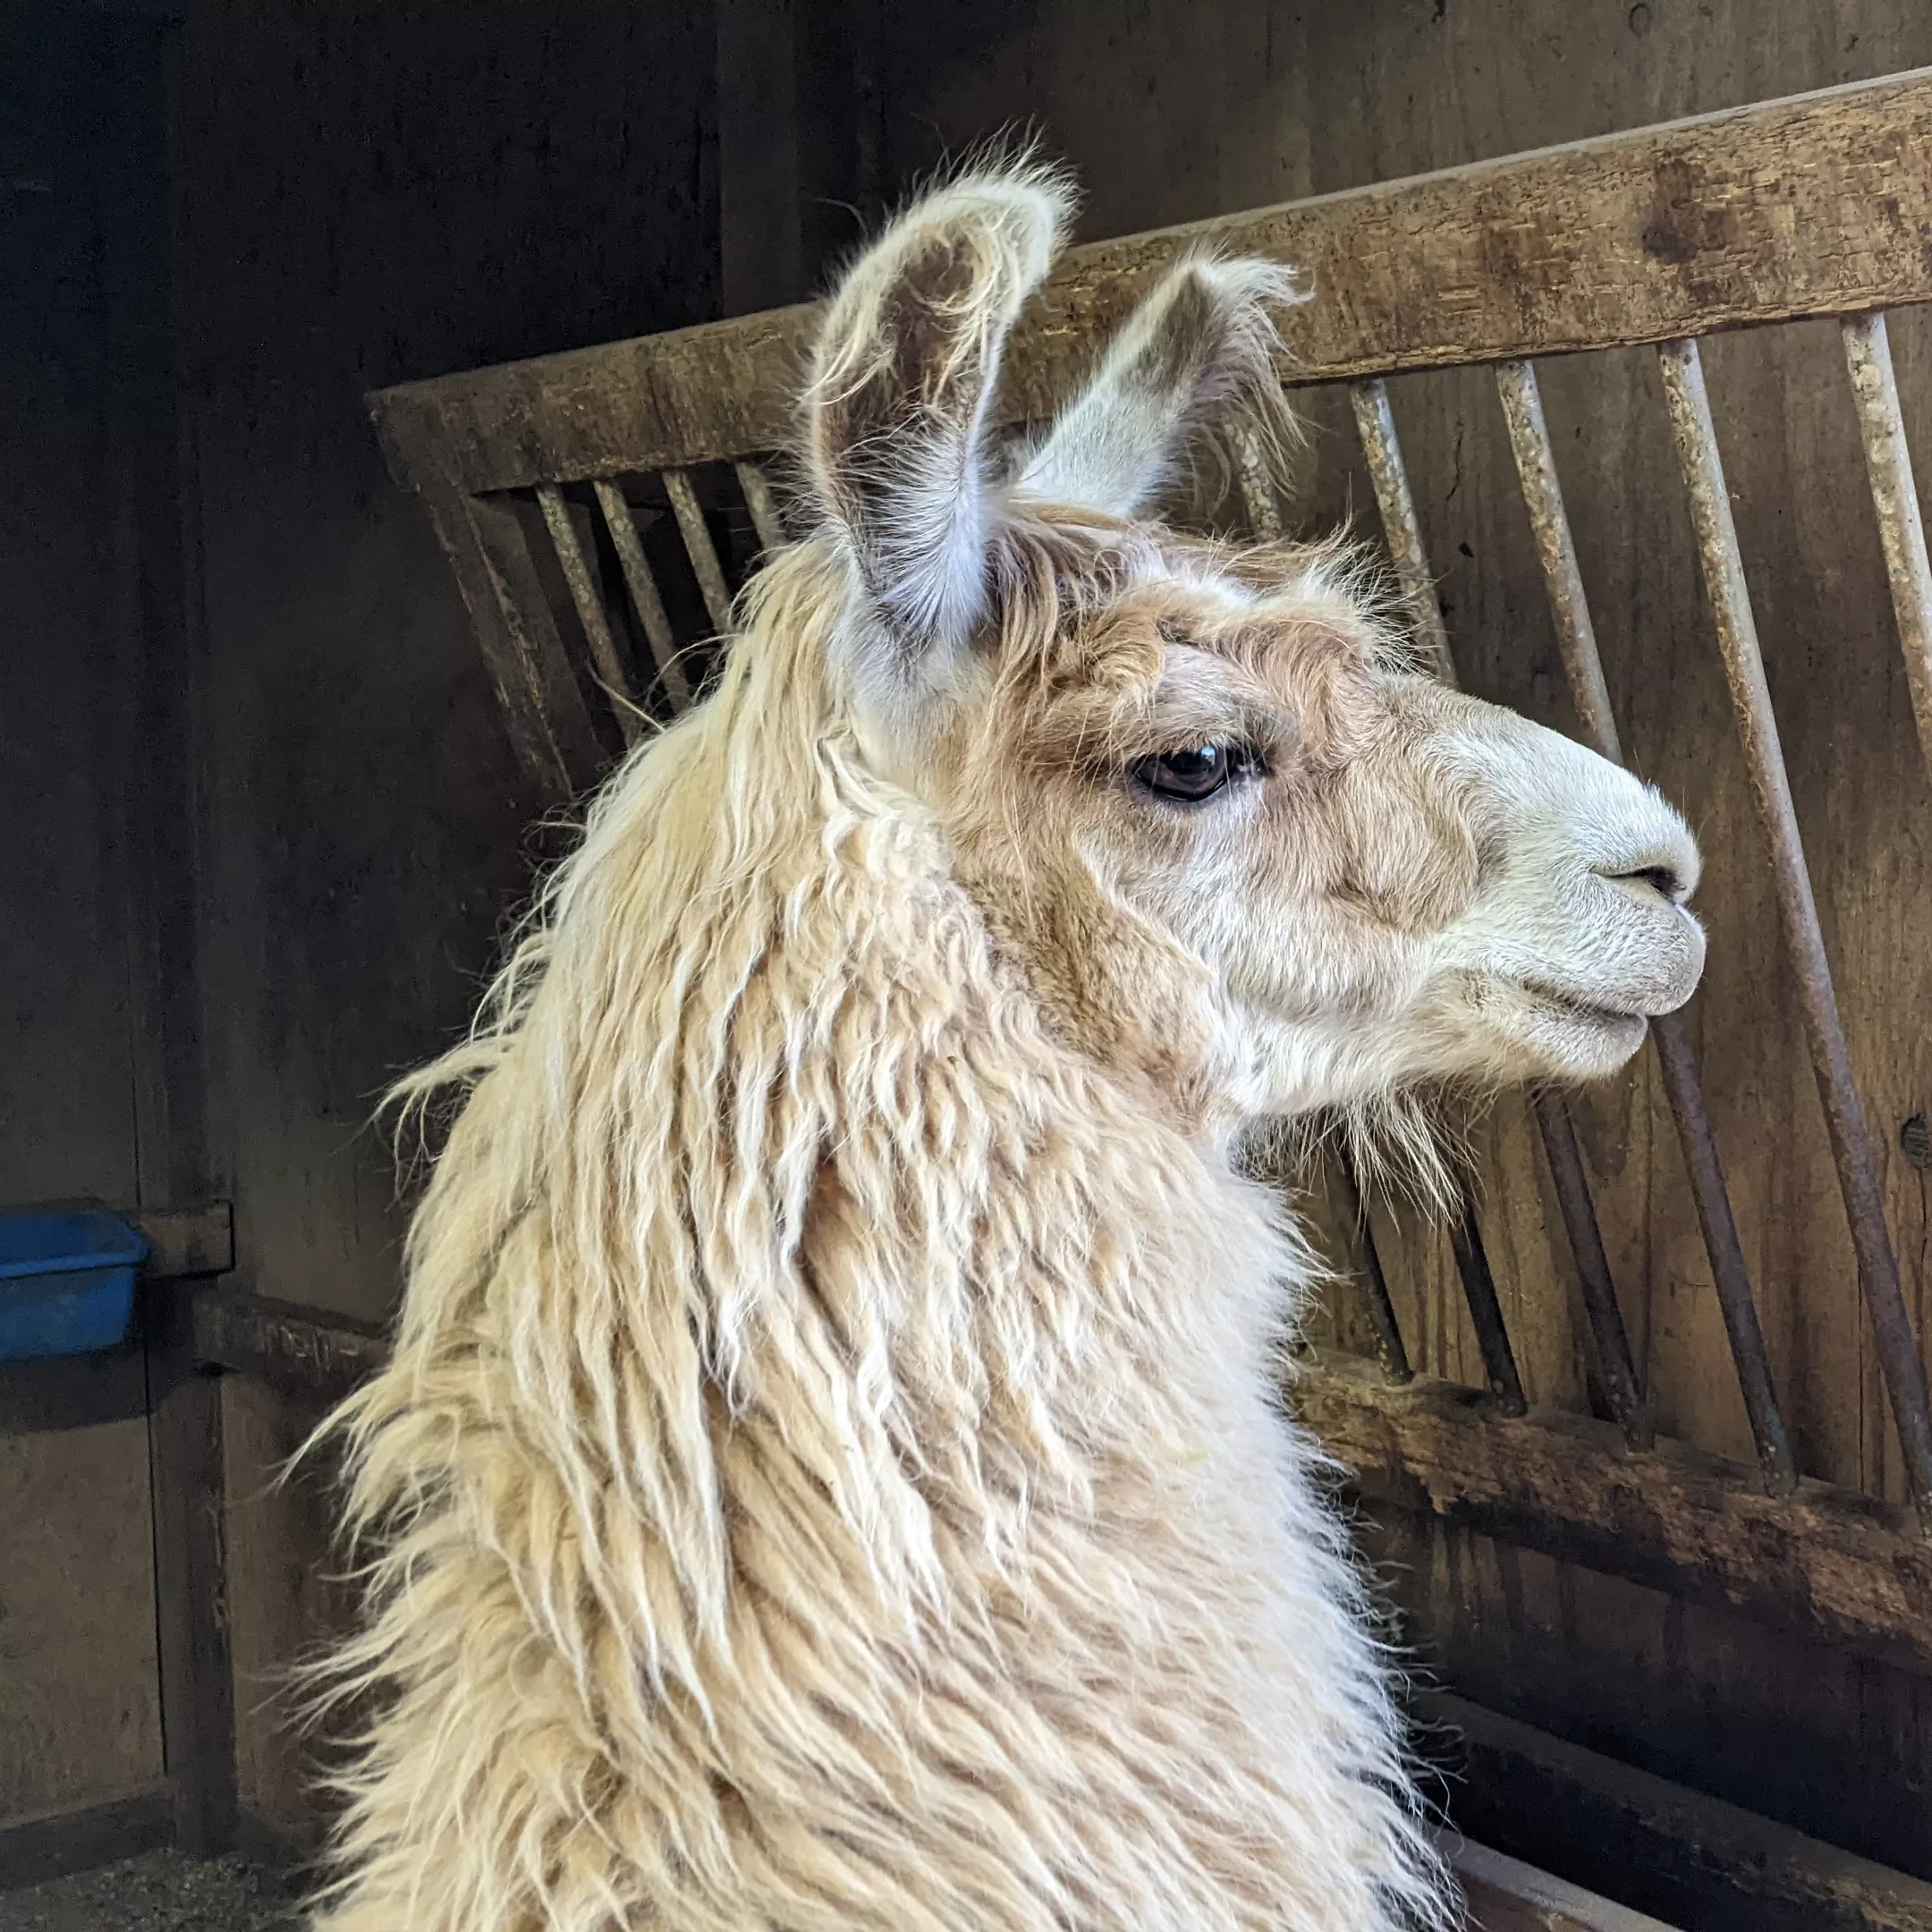 An image of a llama named Boo